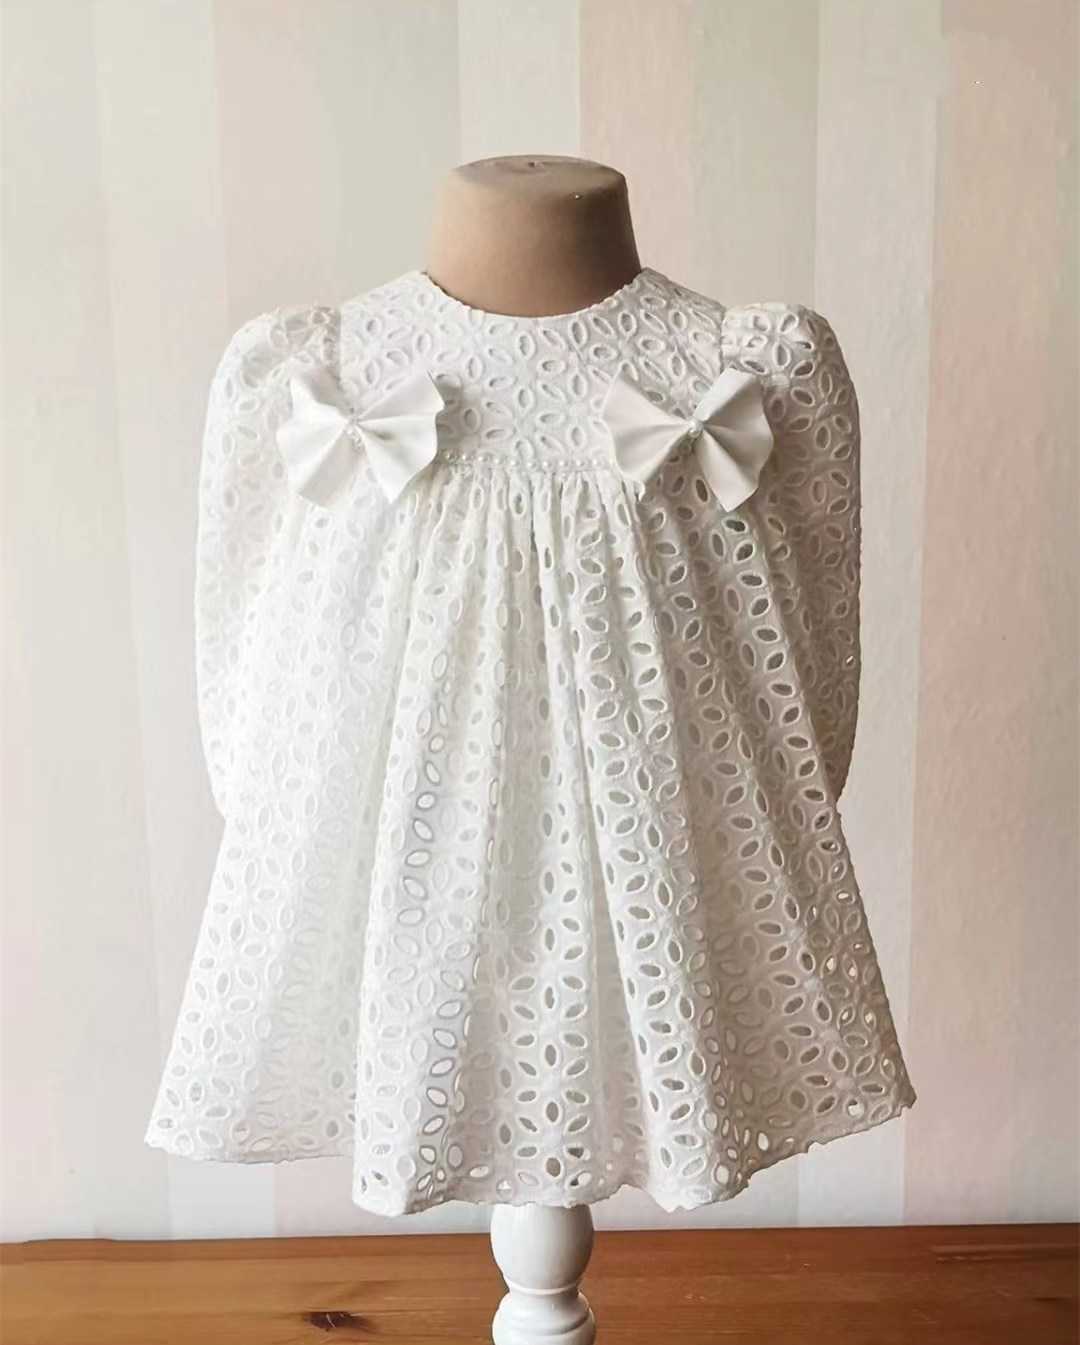 Flickans klänningar 0-10Y Baby Girl Summer White Cotton Hollow Flower Princess Dress For Casual Holiday Baptism Birthday Wedding W0314